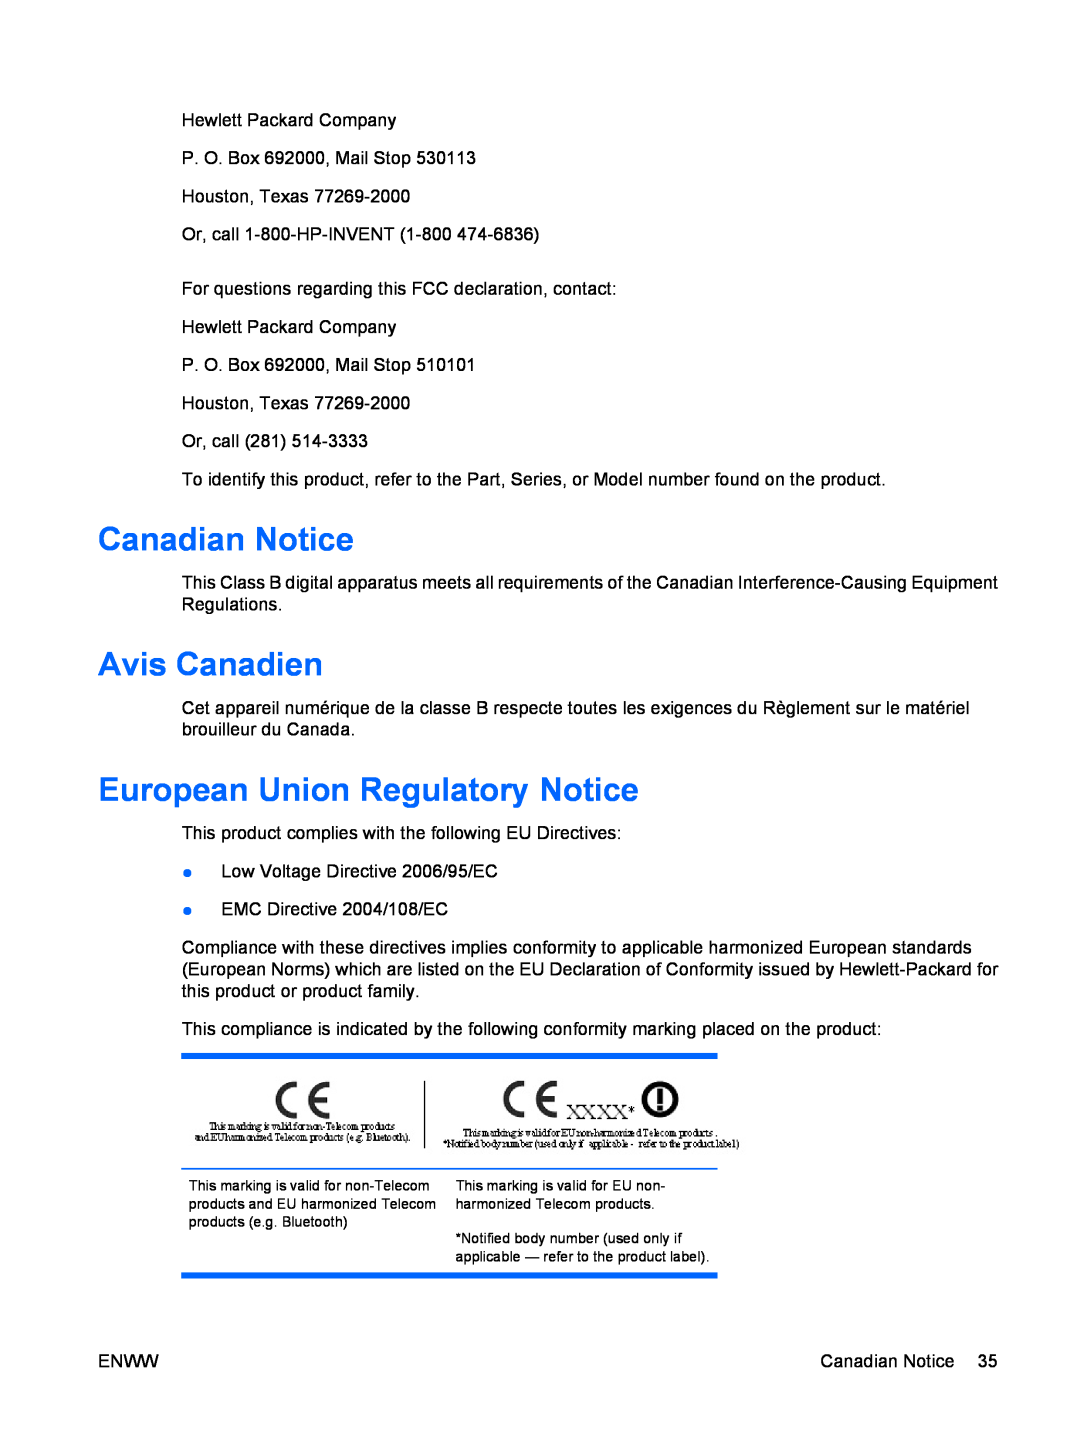 HP LE1901wm, LE2201w manual Canadian Notice, Avis Canadien, European Union Regulatory Notice 